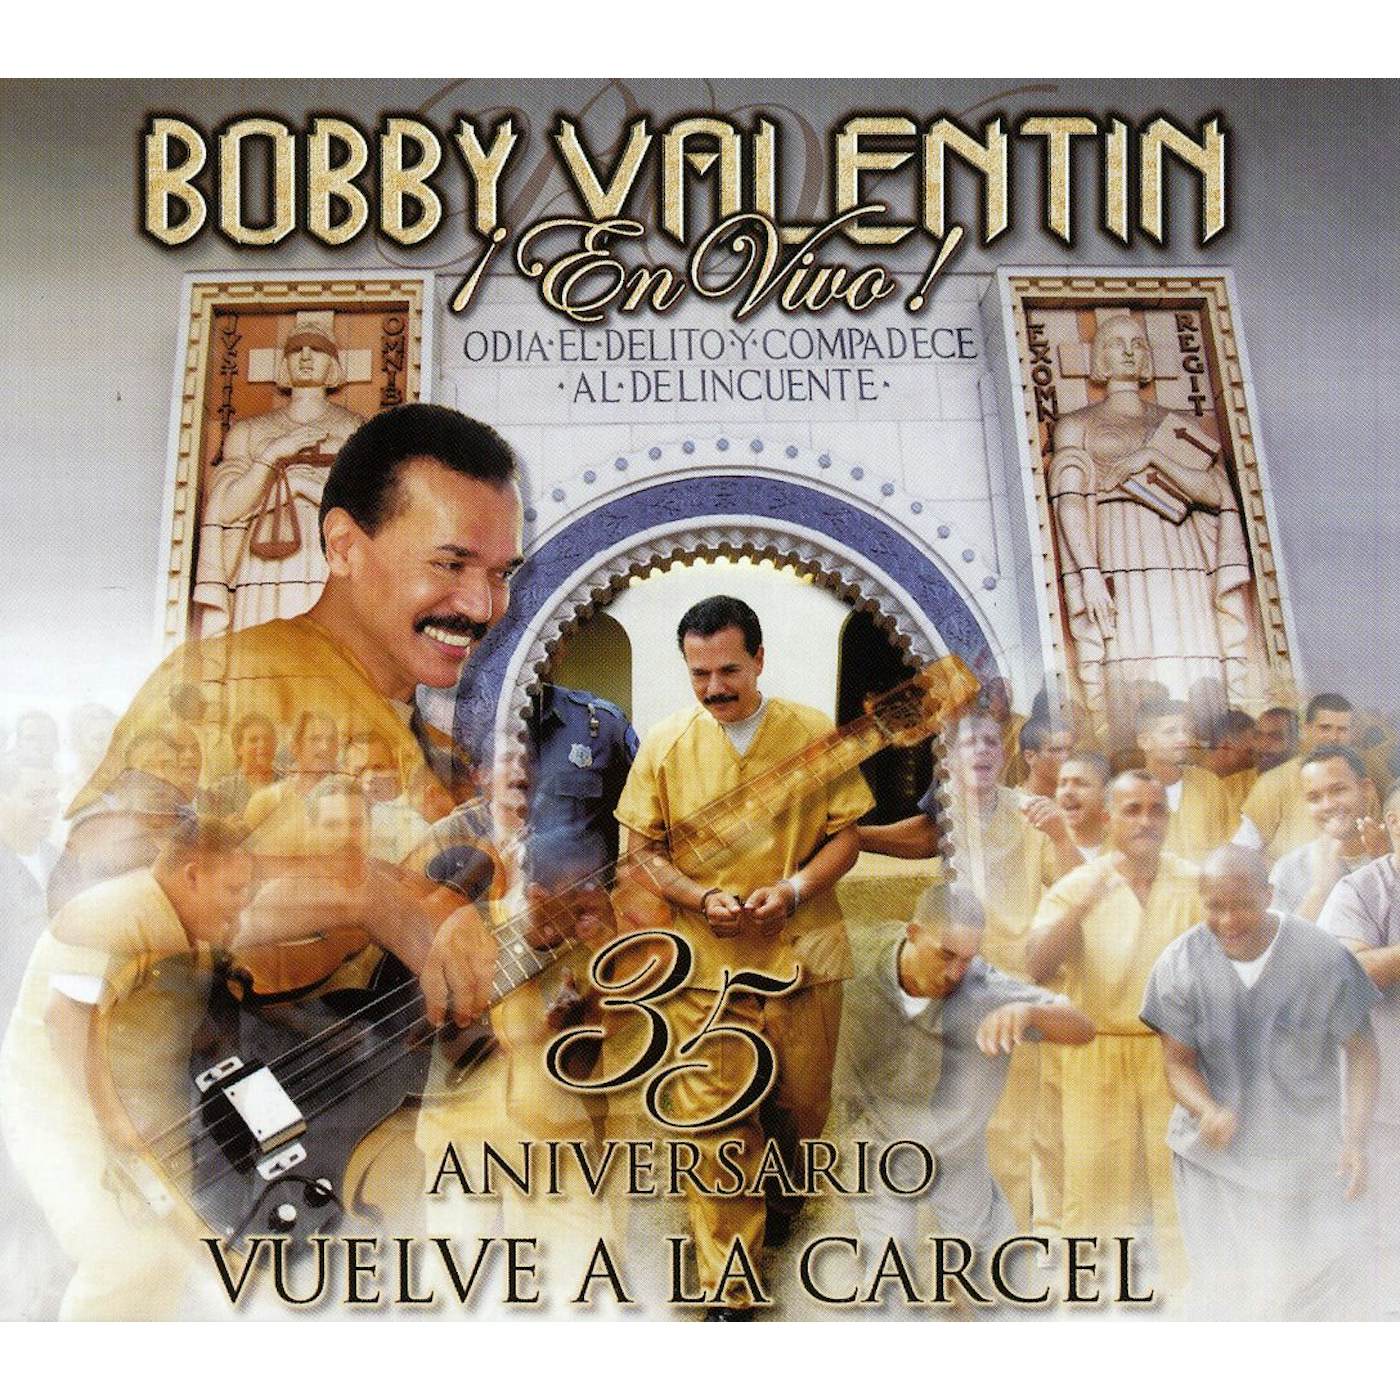 Bobby Valentin 35 ANIVERSARIO CD